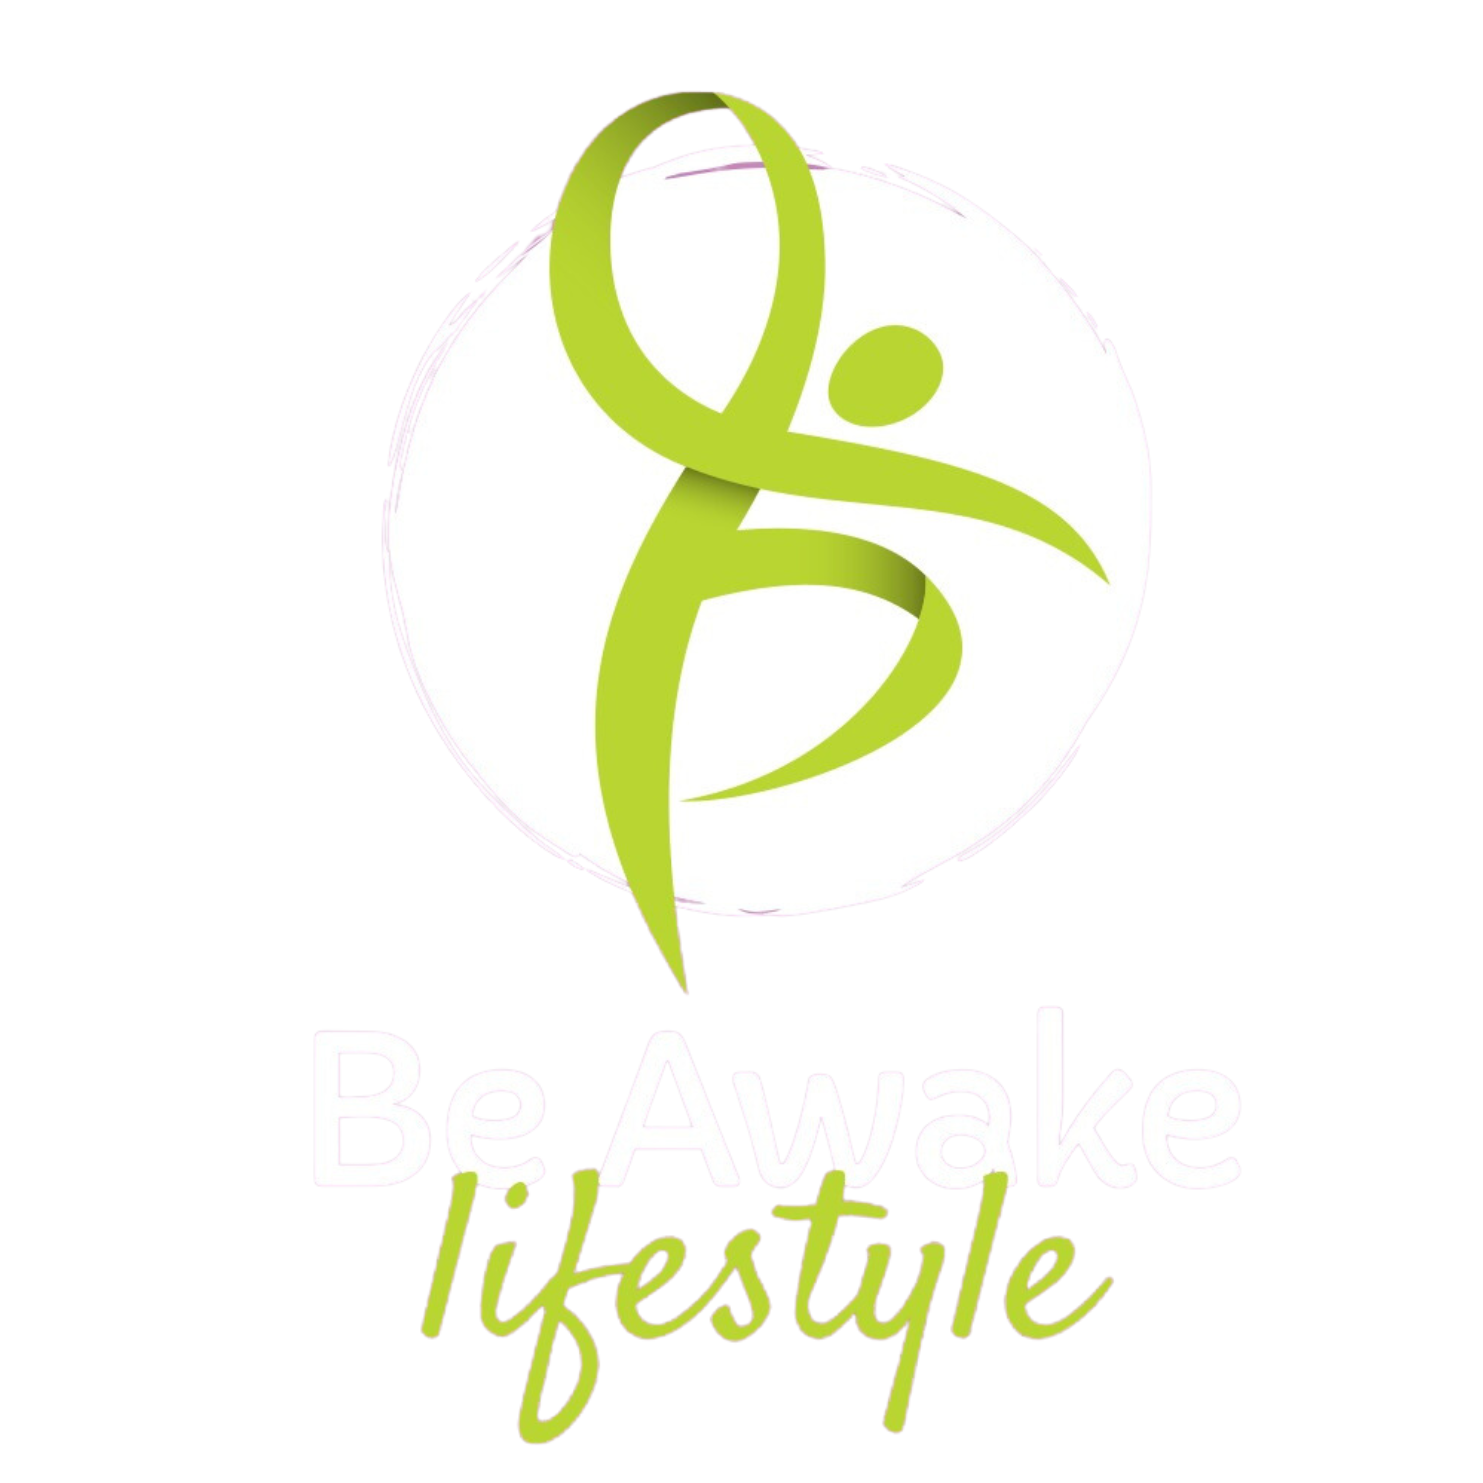 Be Awake Life Style